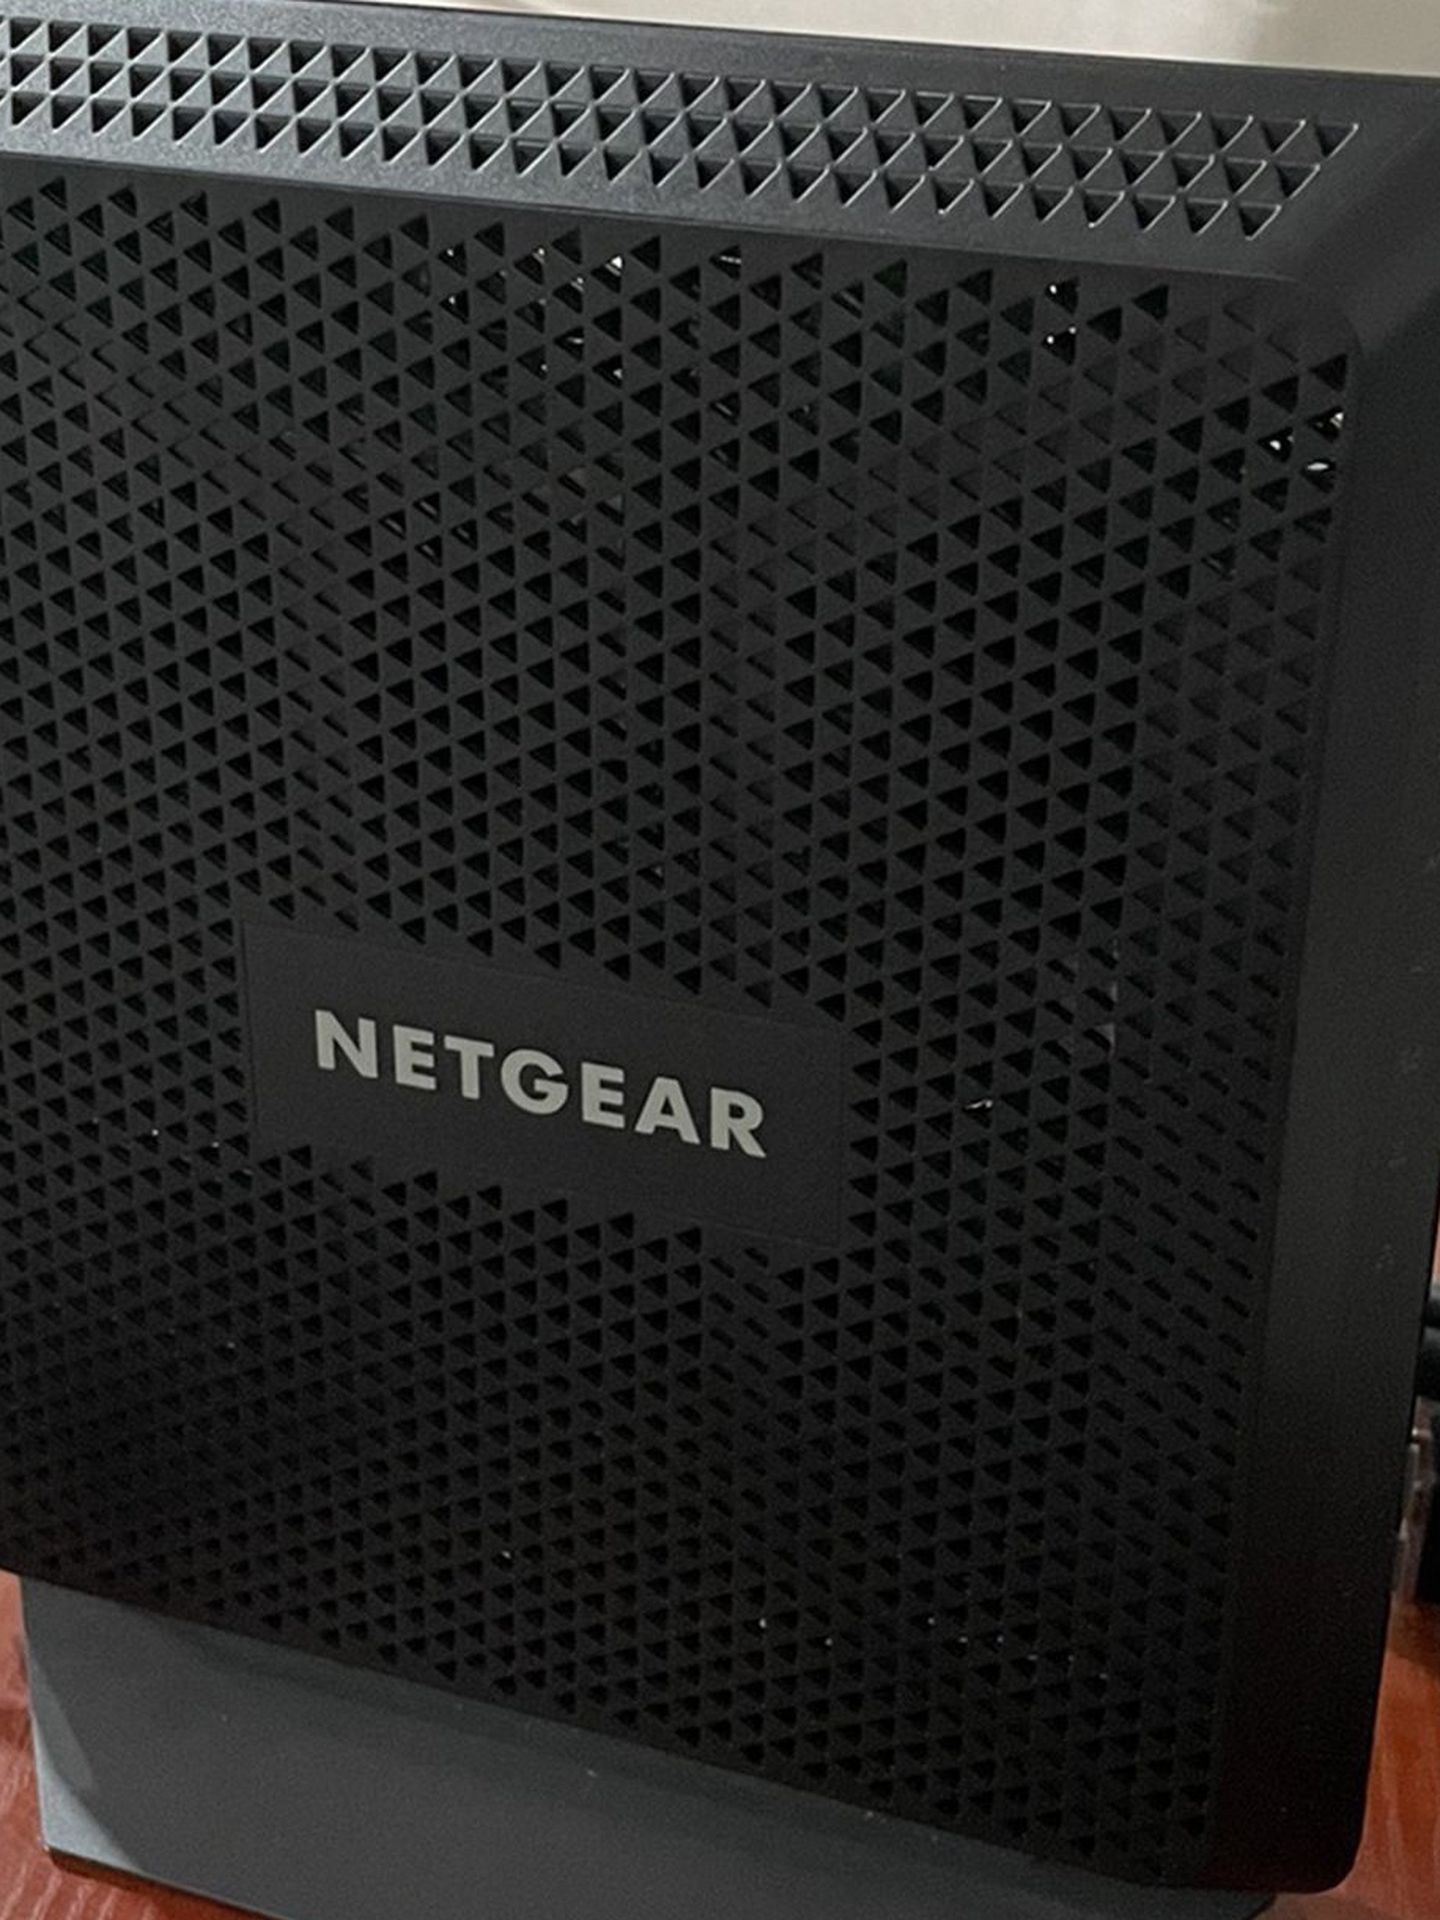 NETGEAR - Nighthawk C7000 AC1900 WiFi Router